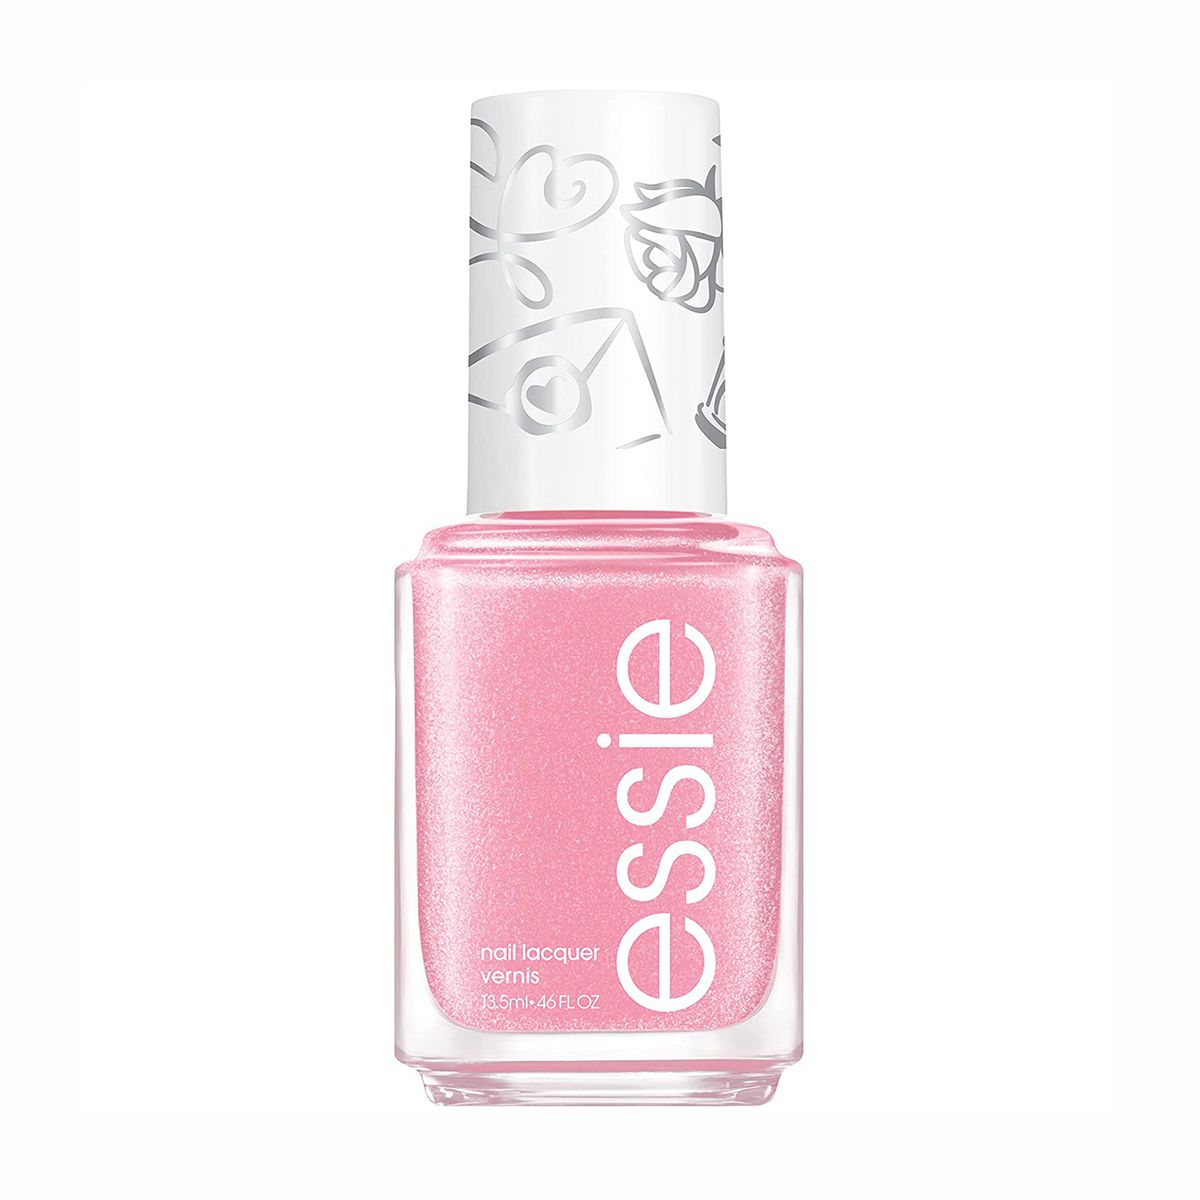 essie nail polish, valentines day limited edition